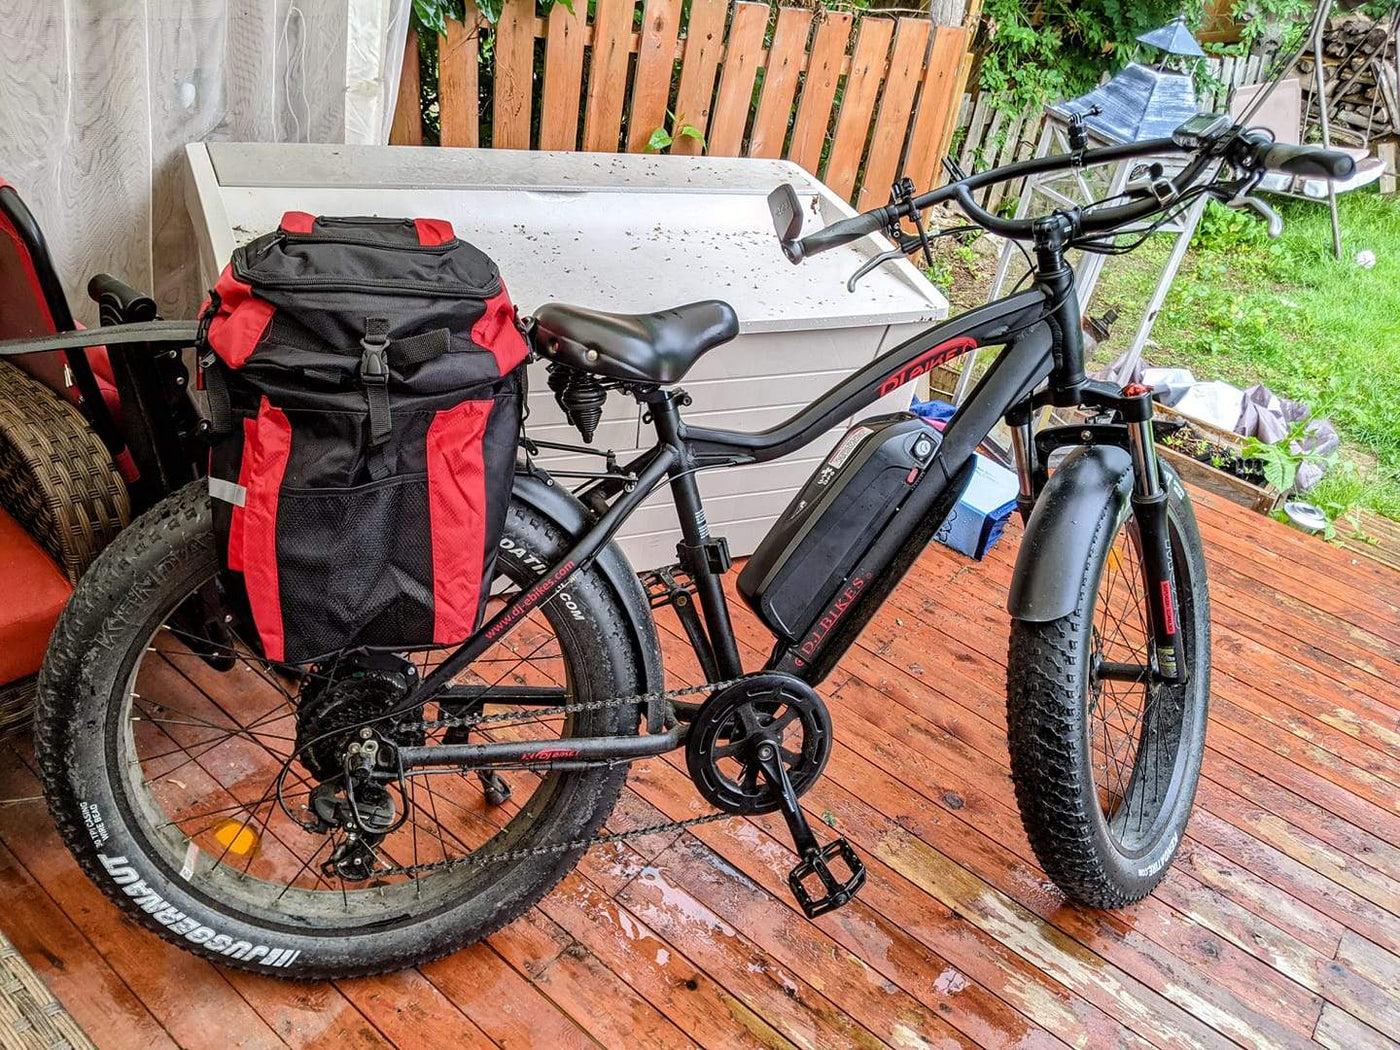 A DJ Fat Bike fat tire e-bike equipped with pannier bag on a wooden deck